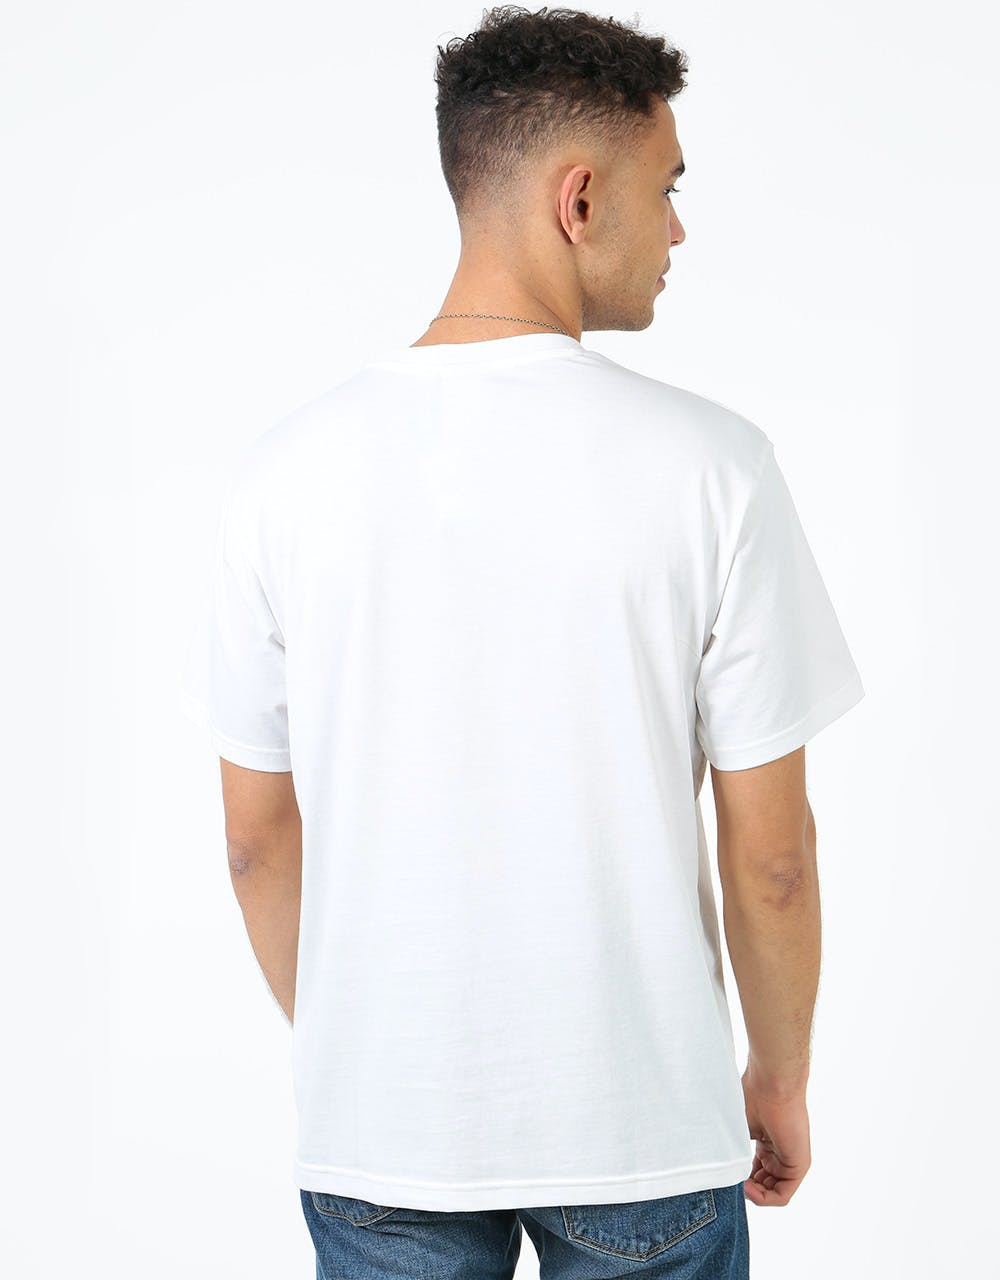 Adidas Forsut T-Shirt - Off White/Amber Tint